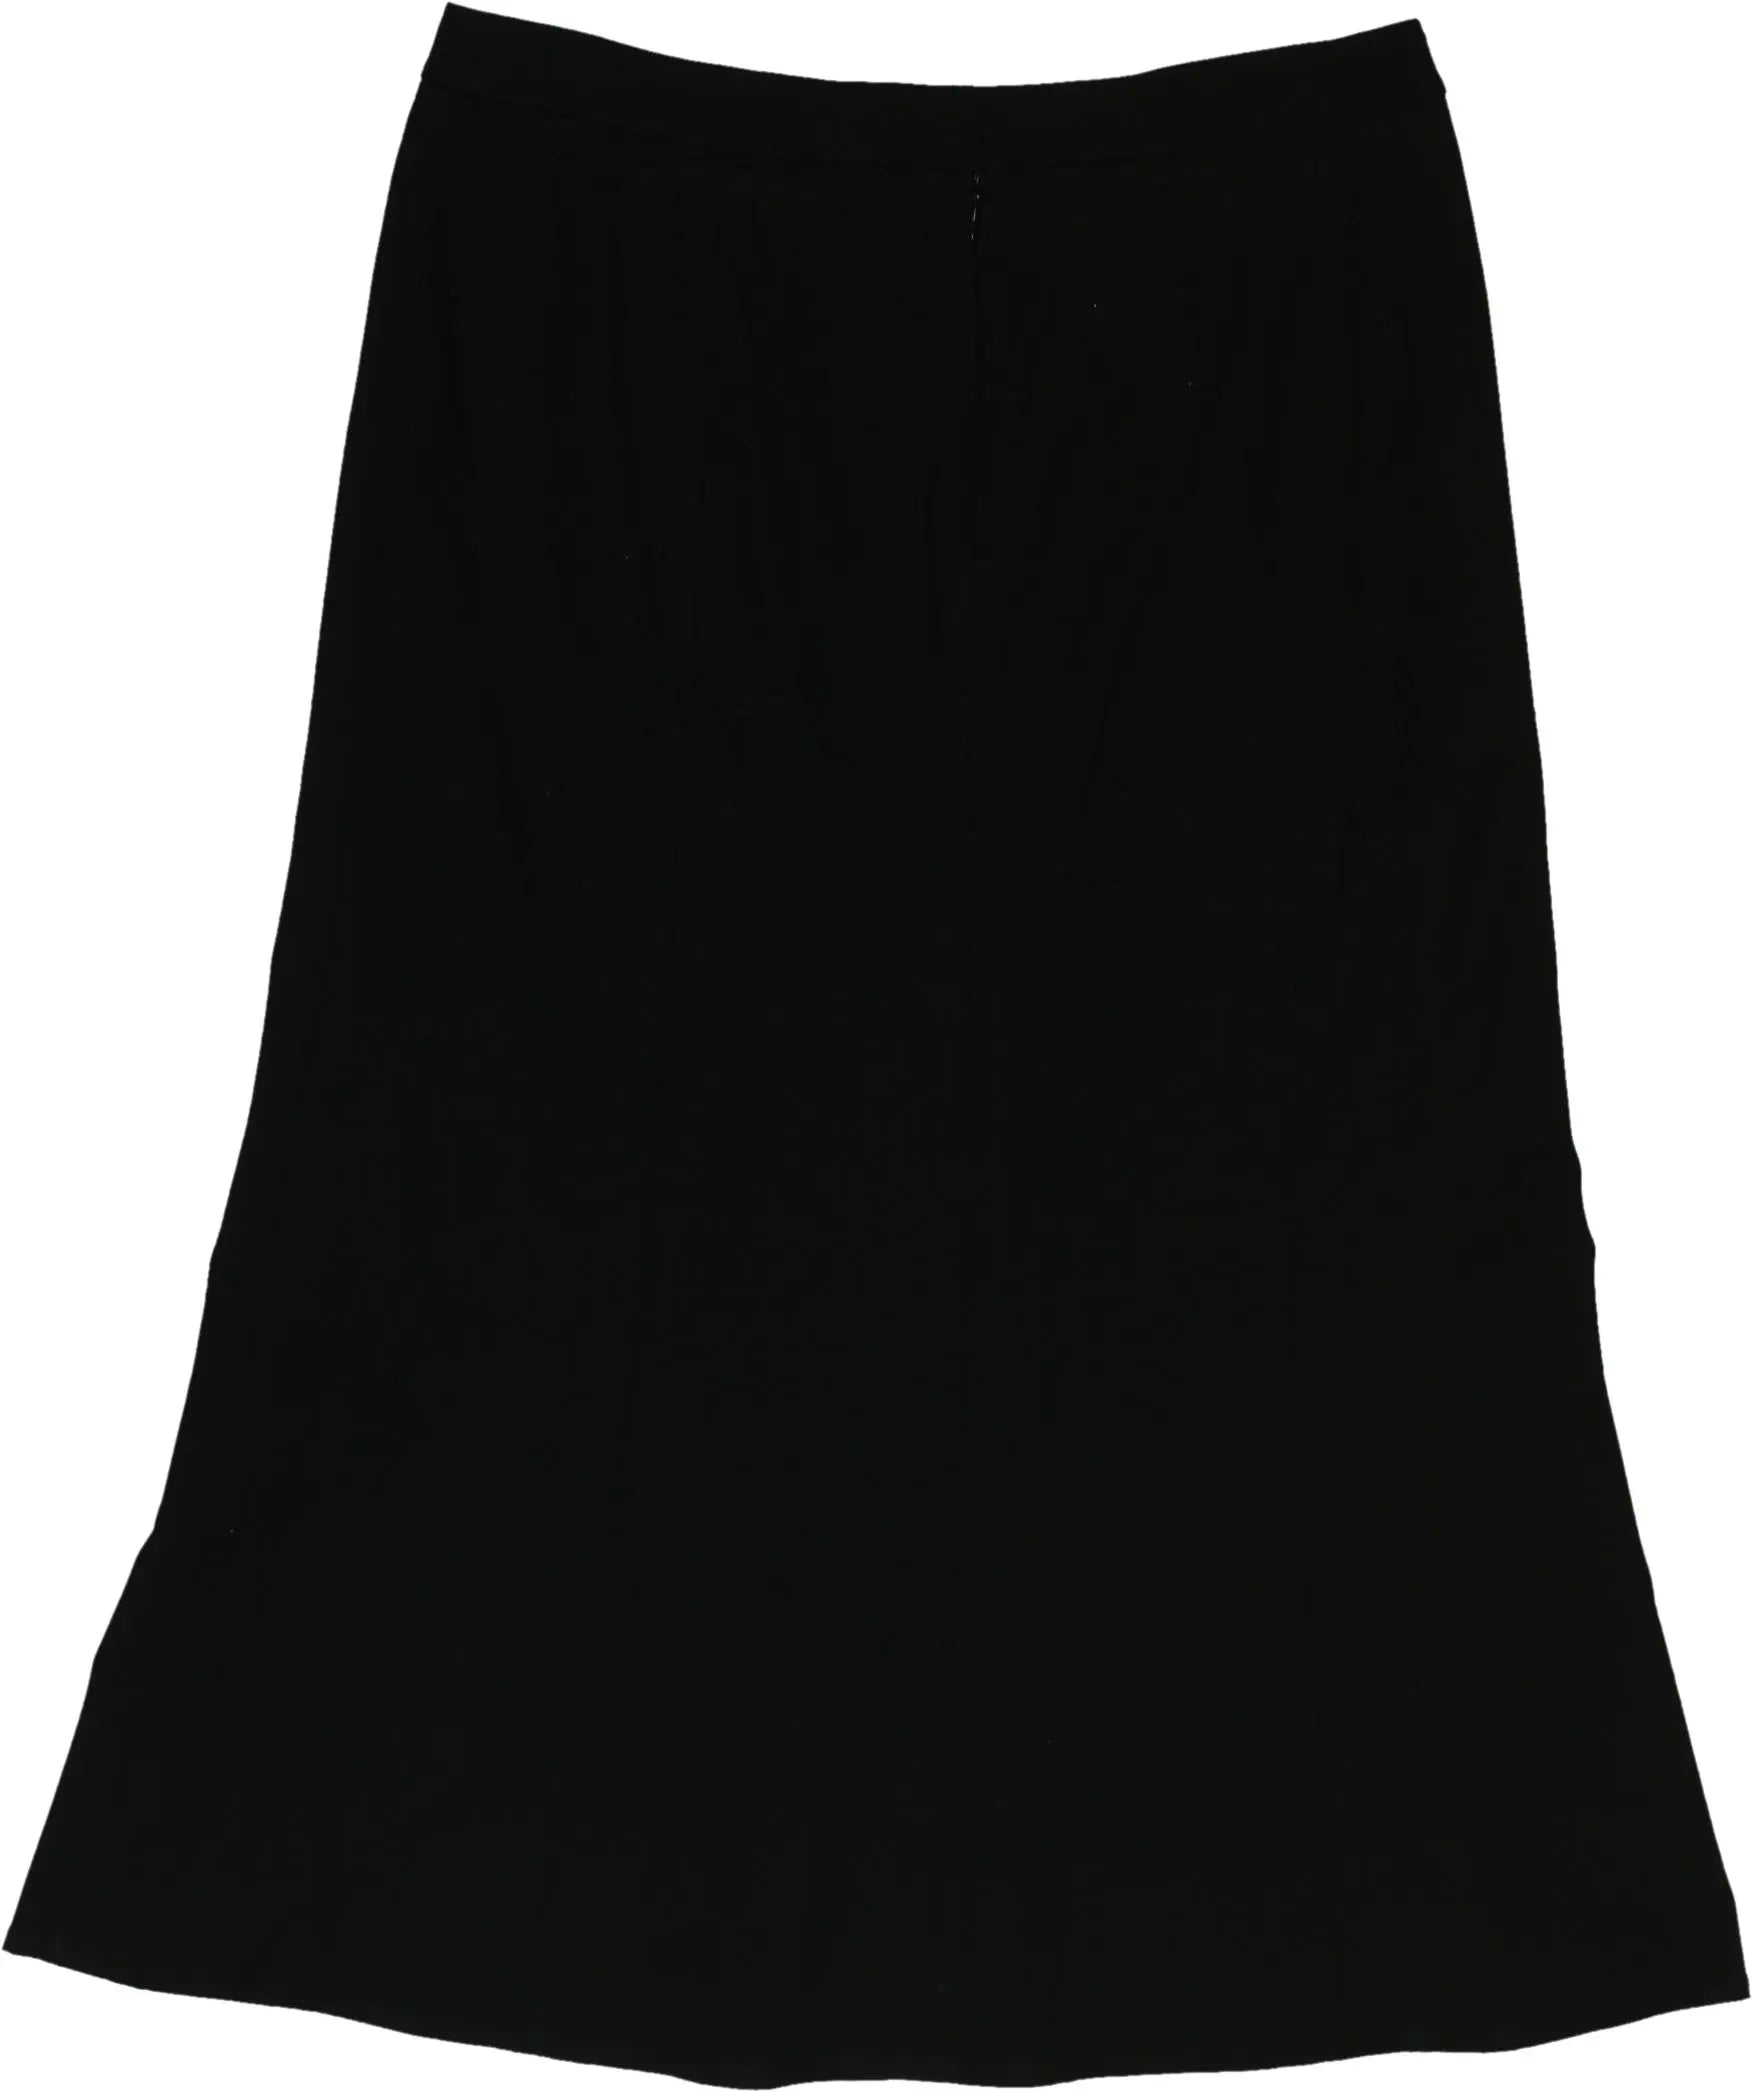 Ralph Lauren - Black A-line skirt- ThriftTale.com - Vintage and second handclothing